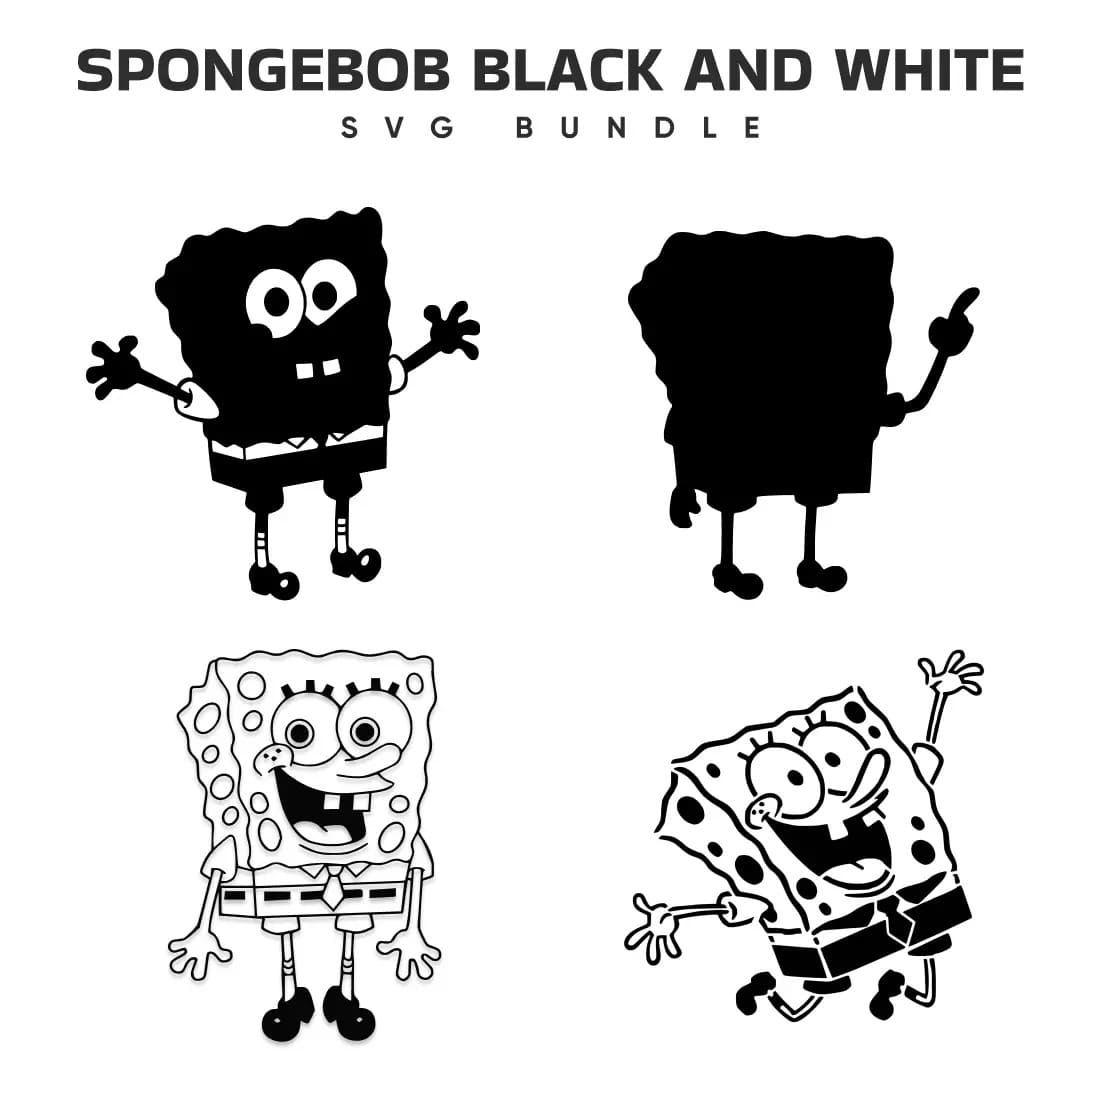 Spongebob Black And White SVG Bundle Preview.